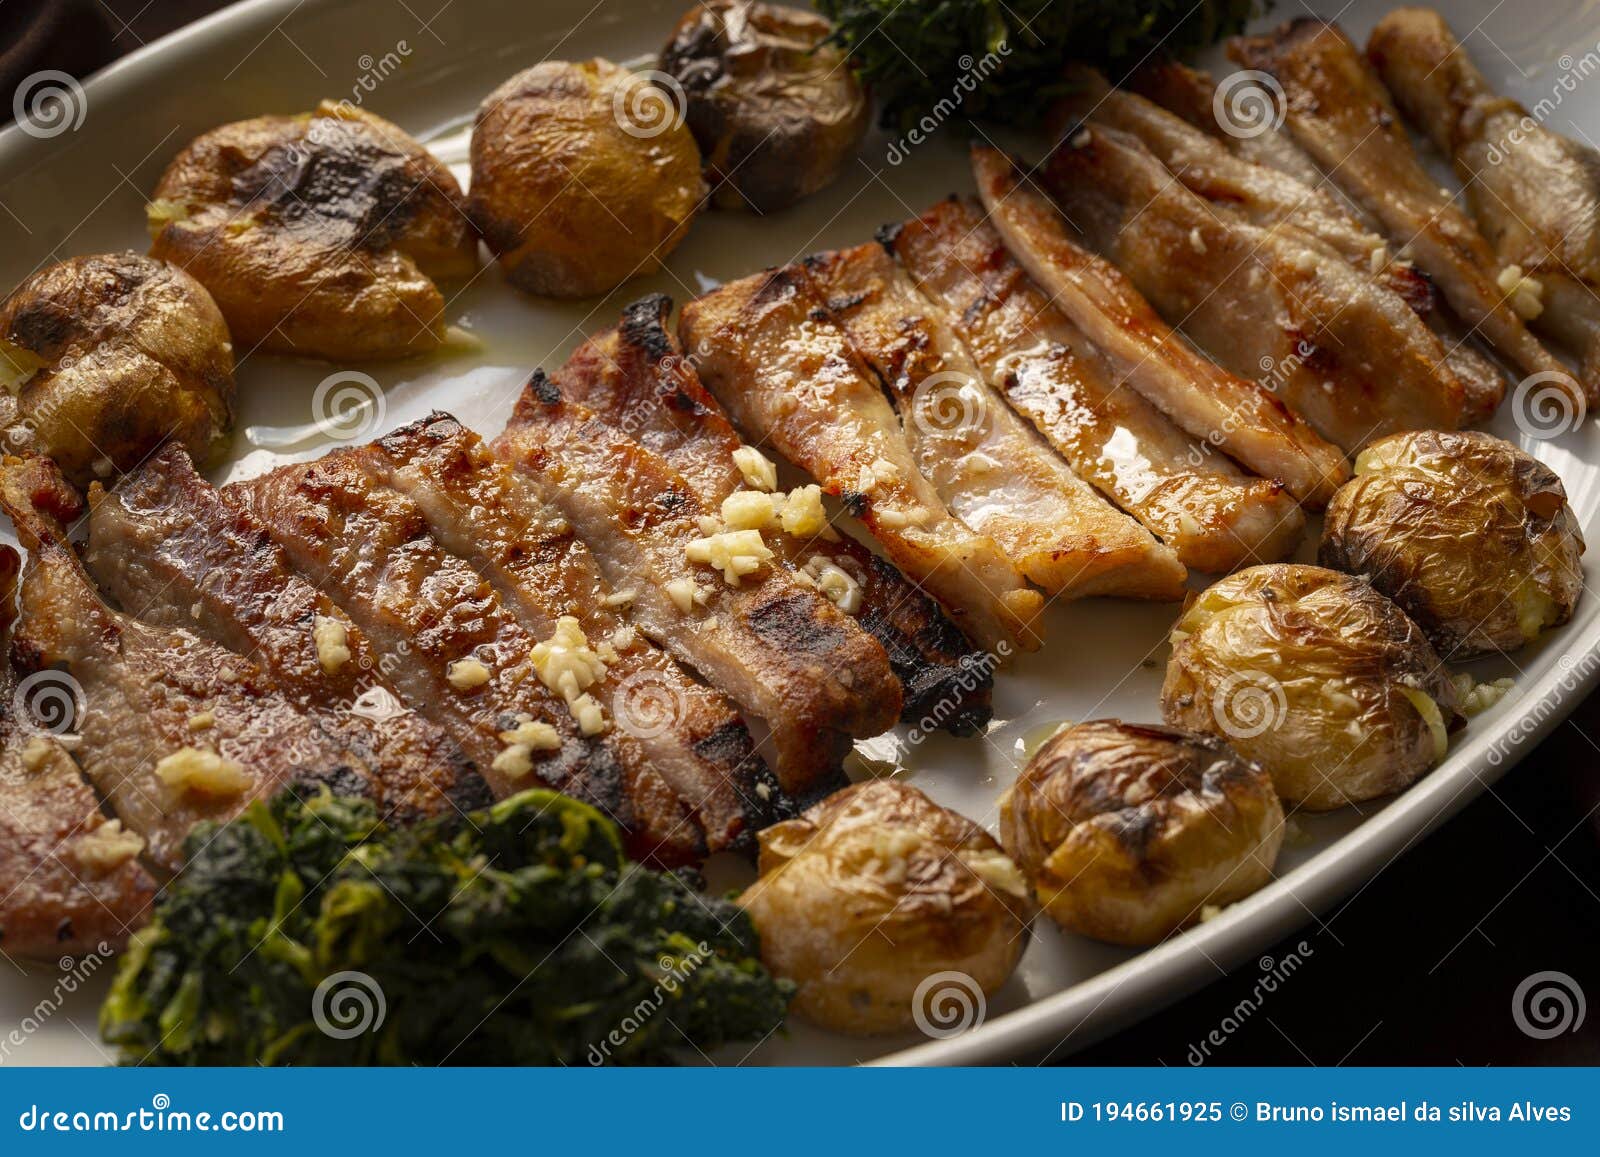 sliced black pig meat `secretos de porco preto` with smashed potatoes and turnip greens, a typical iberian plate.